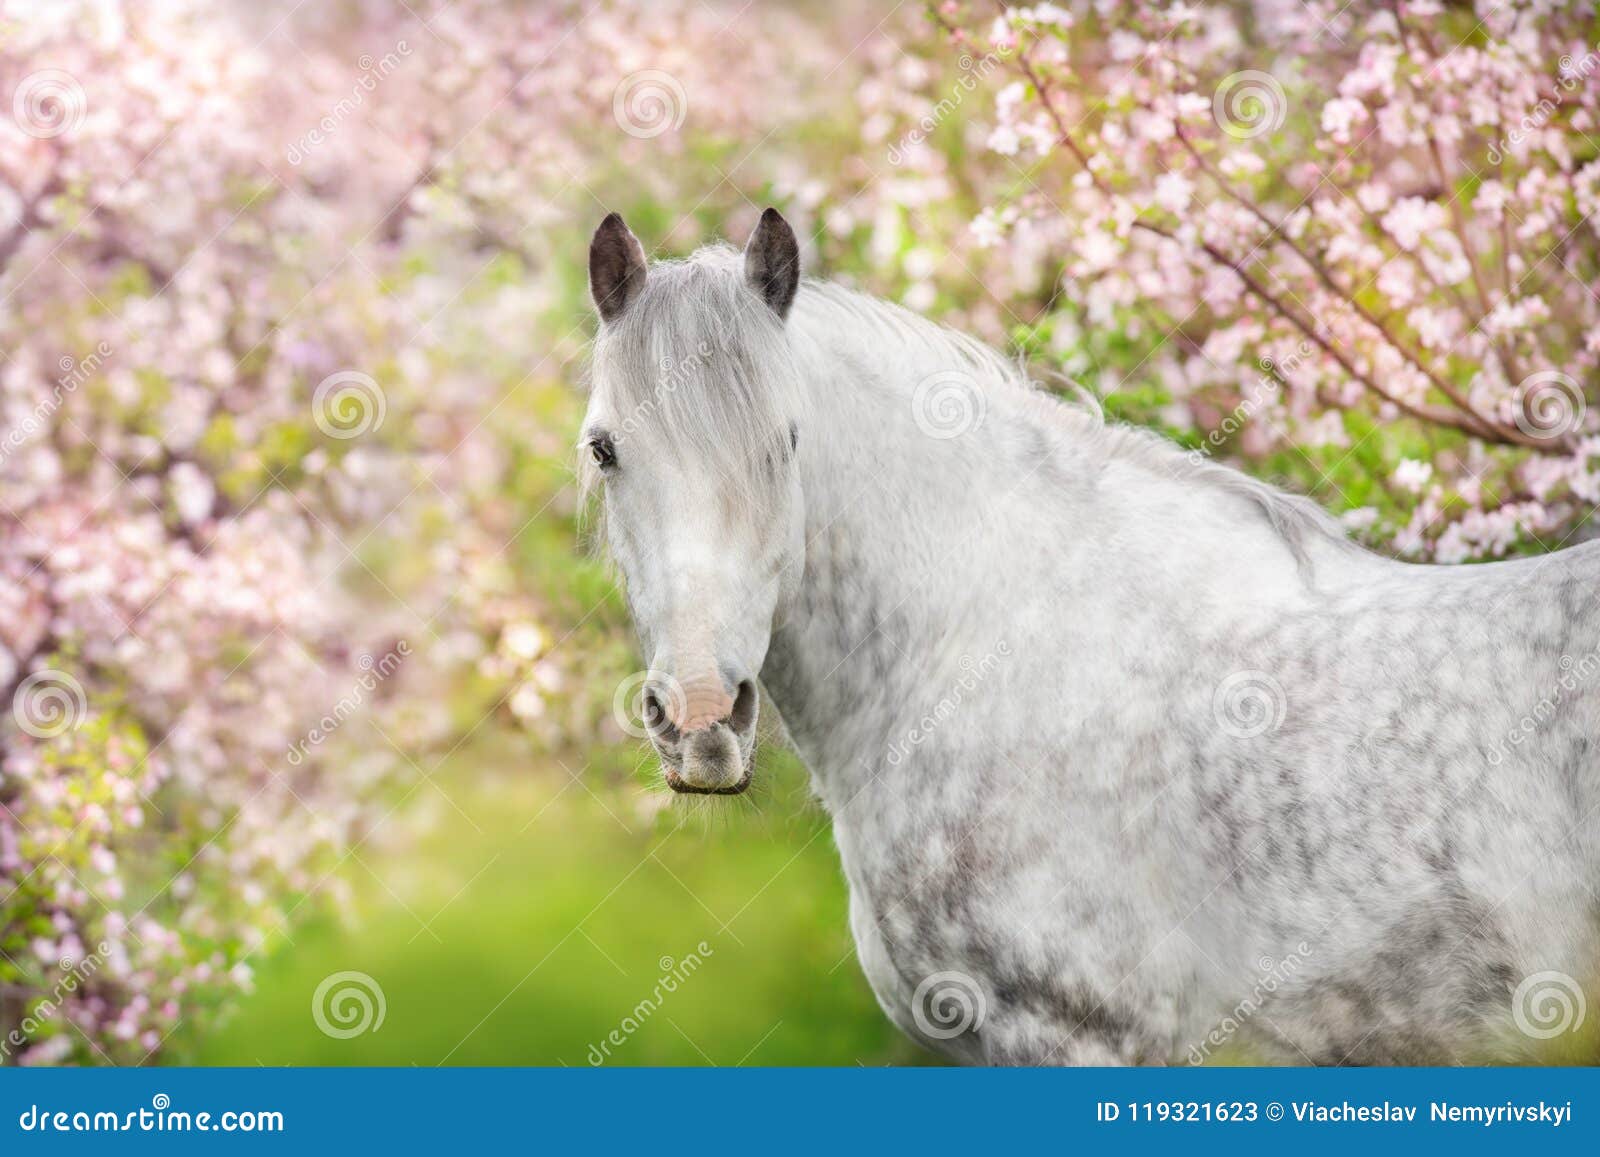 white horse portrait in blossom